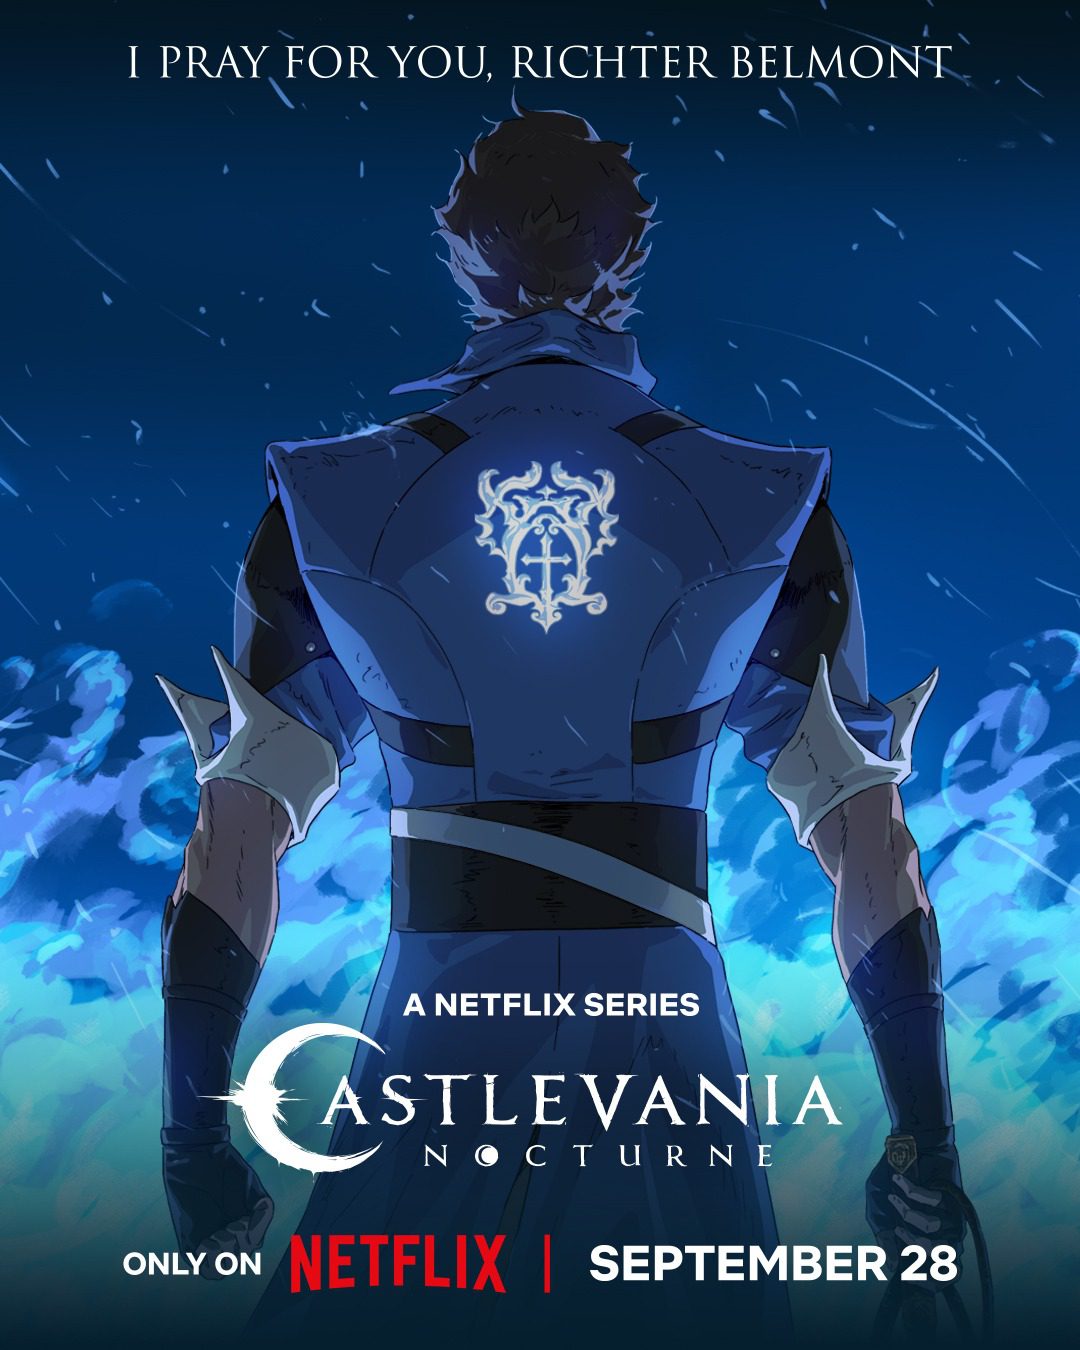 Anime Castlevania Noturno Disponível @Netflix Brasil Sigam nossa pá